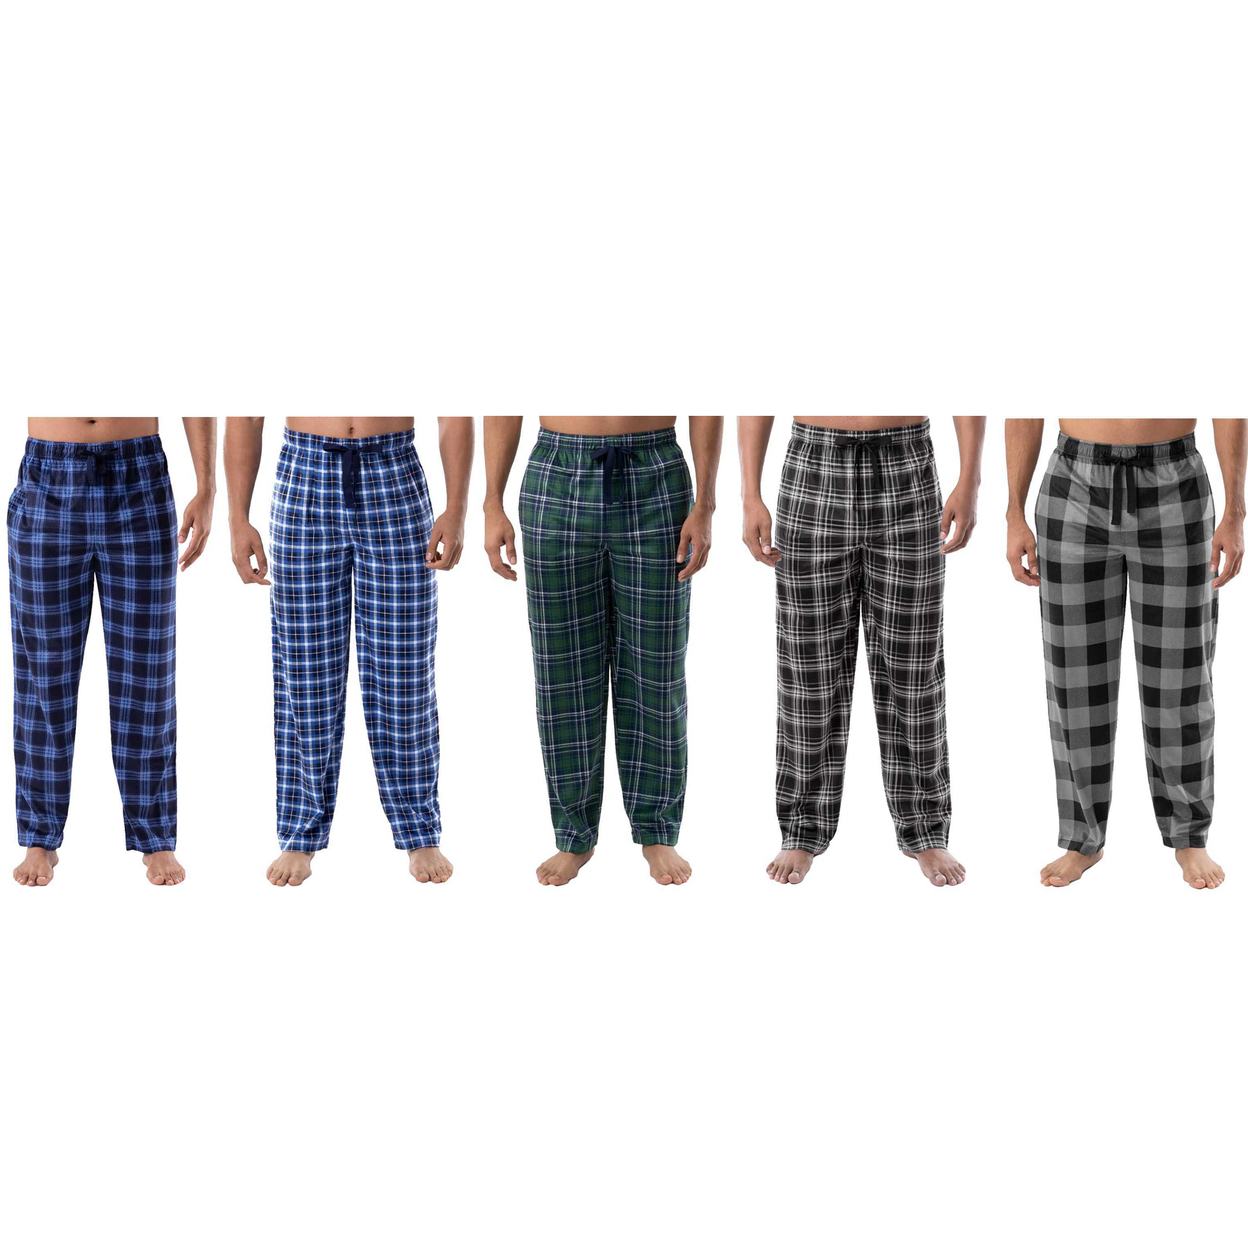 5-Pack: Men's Ultra-Soft Cozy Lounge Sleep Micro Fleece Plaid Pajama Pants - Medium